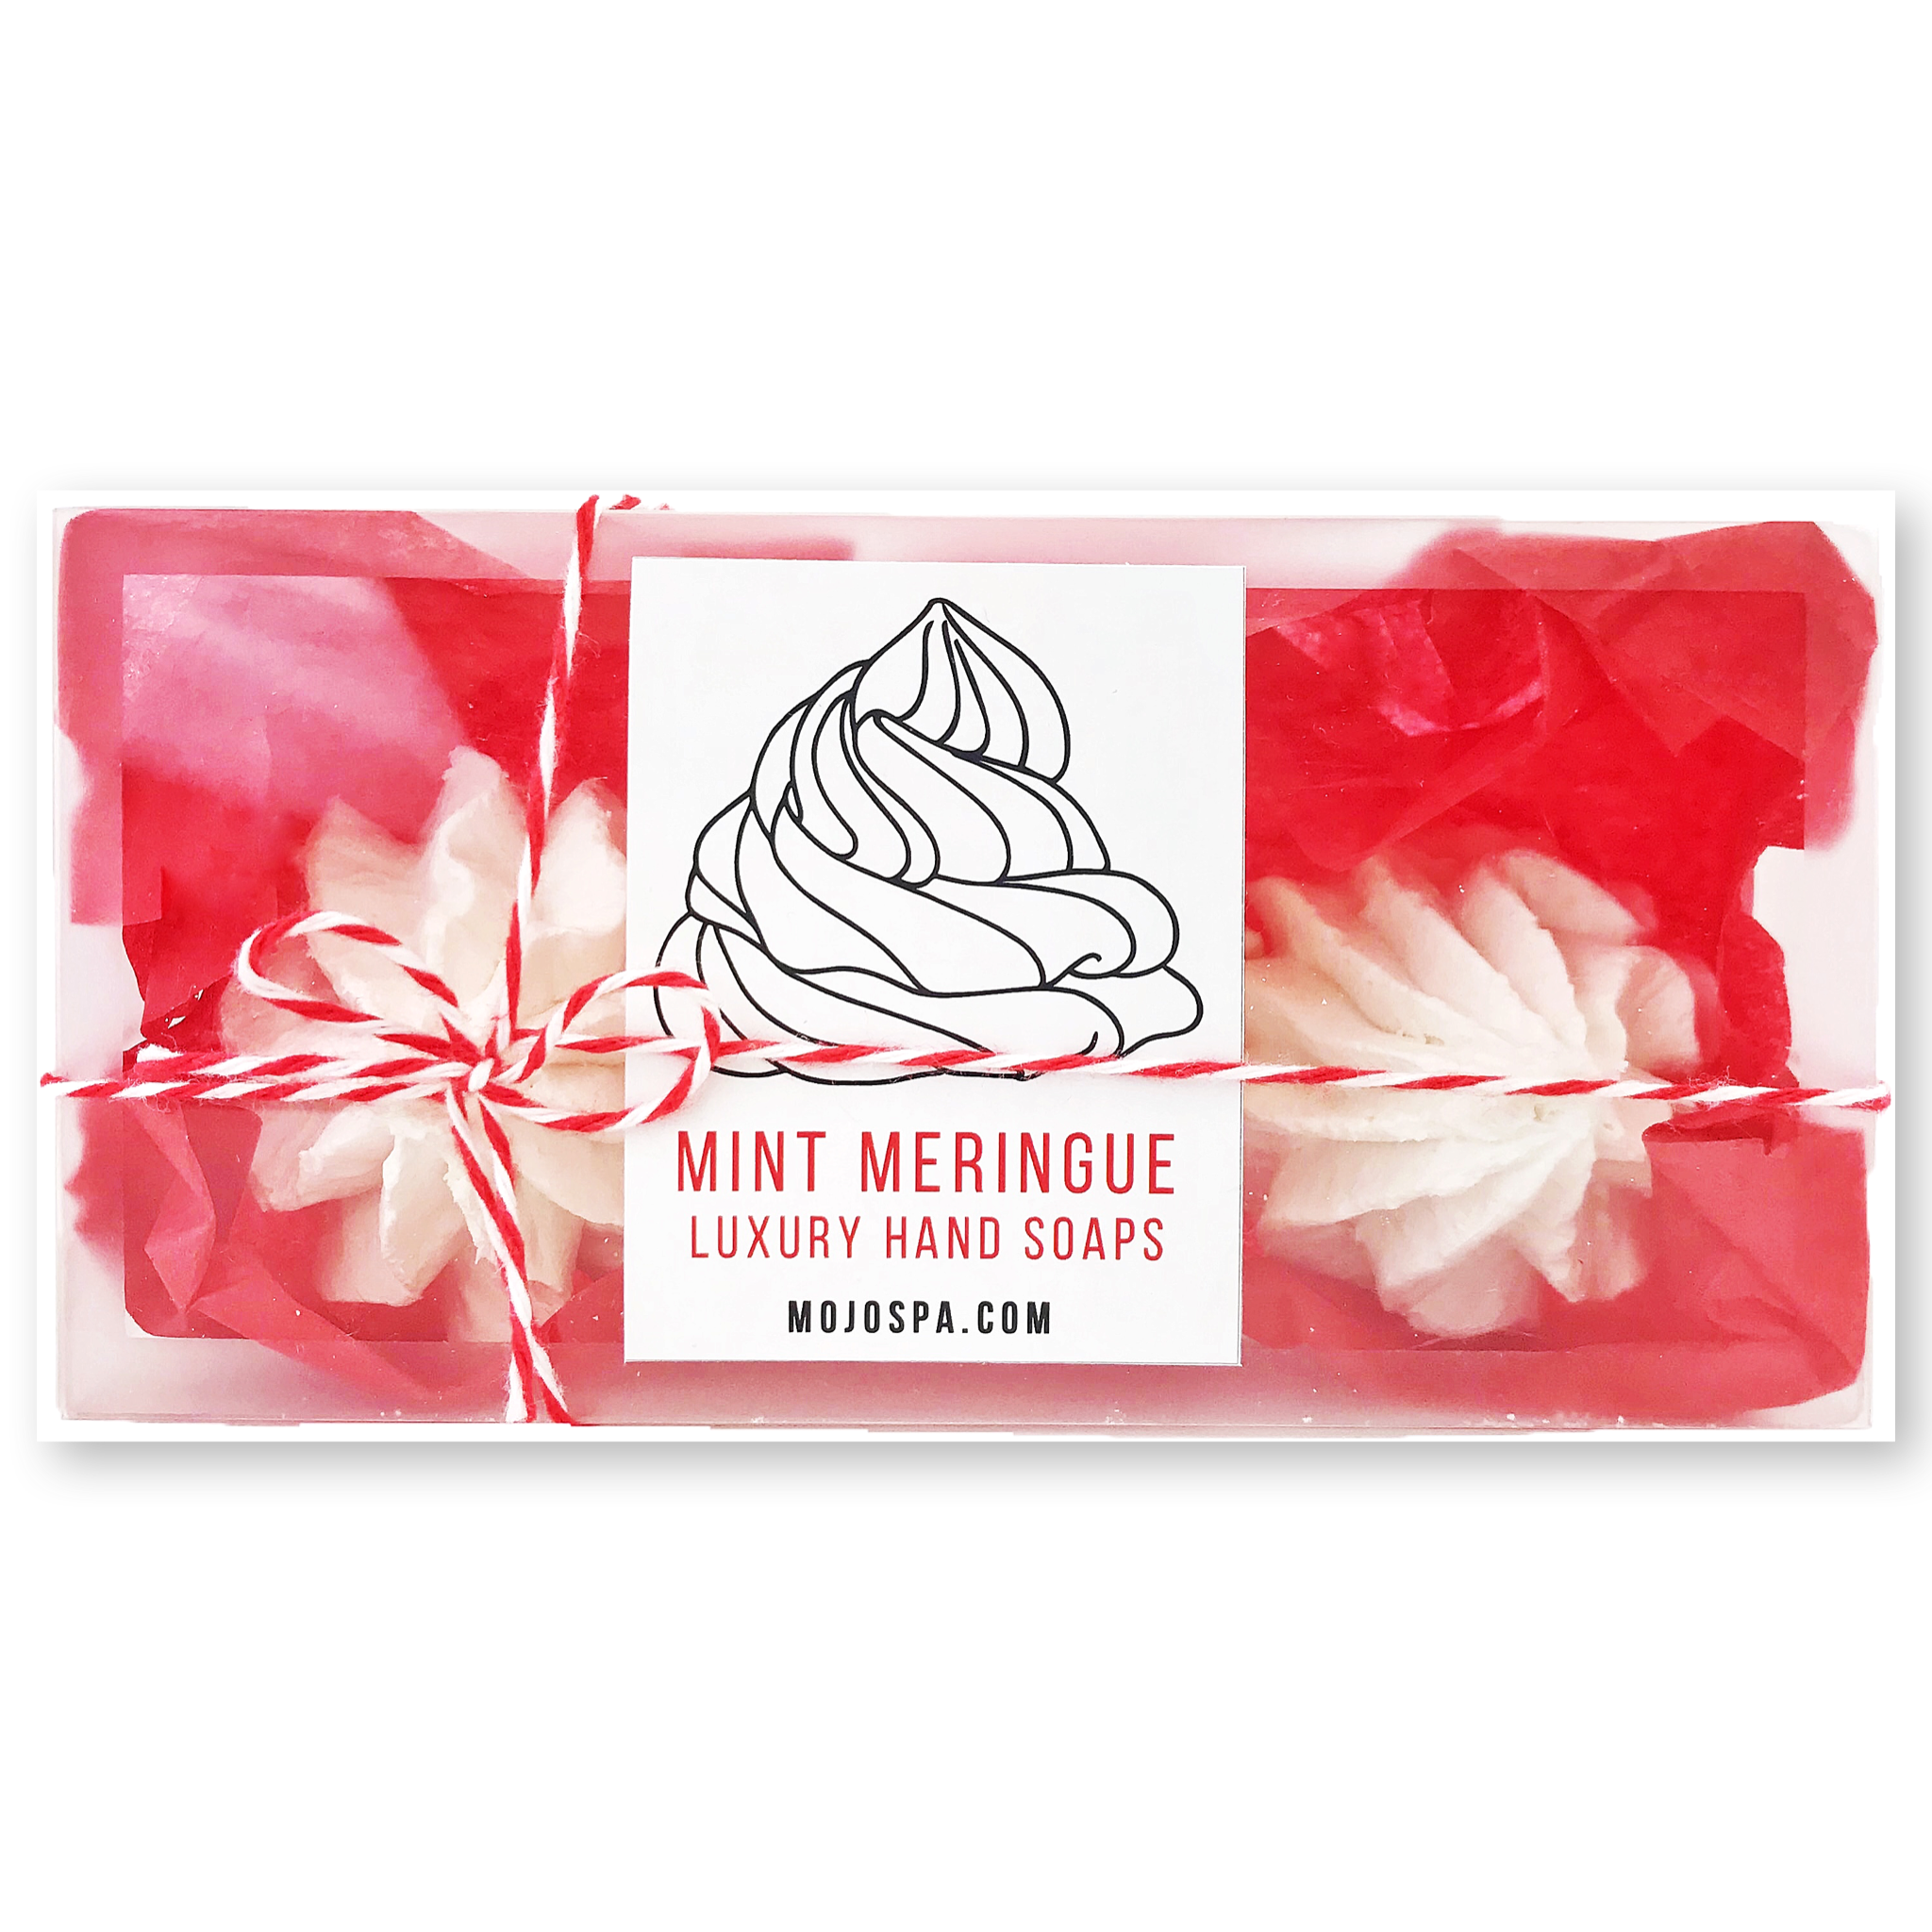 Mint Meringue Luxury Hand Soaps